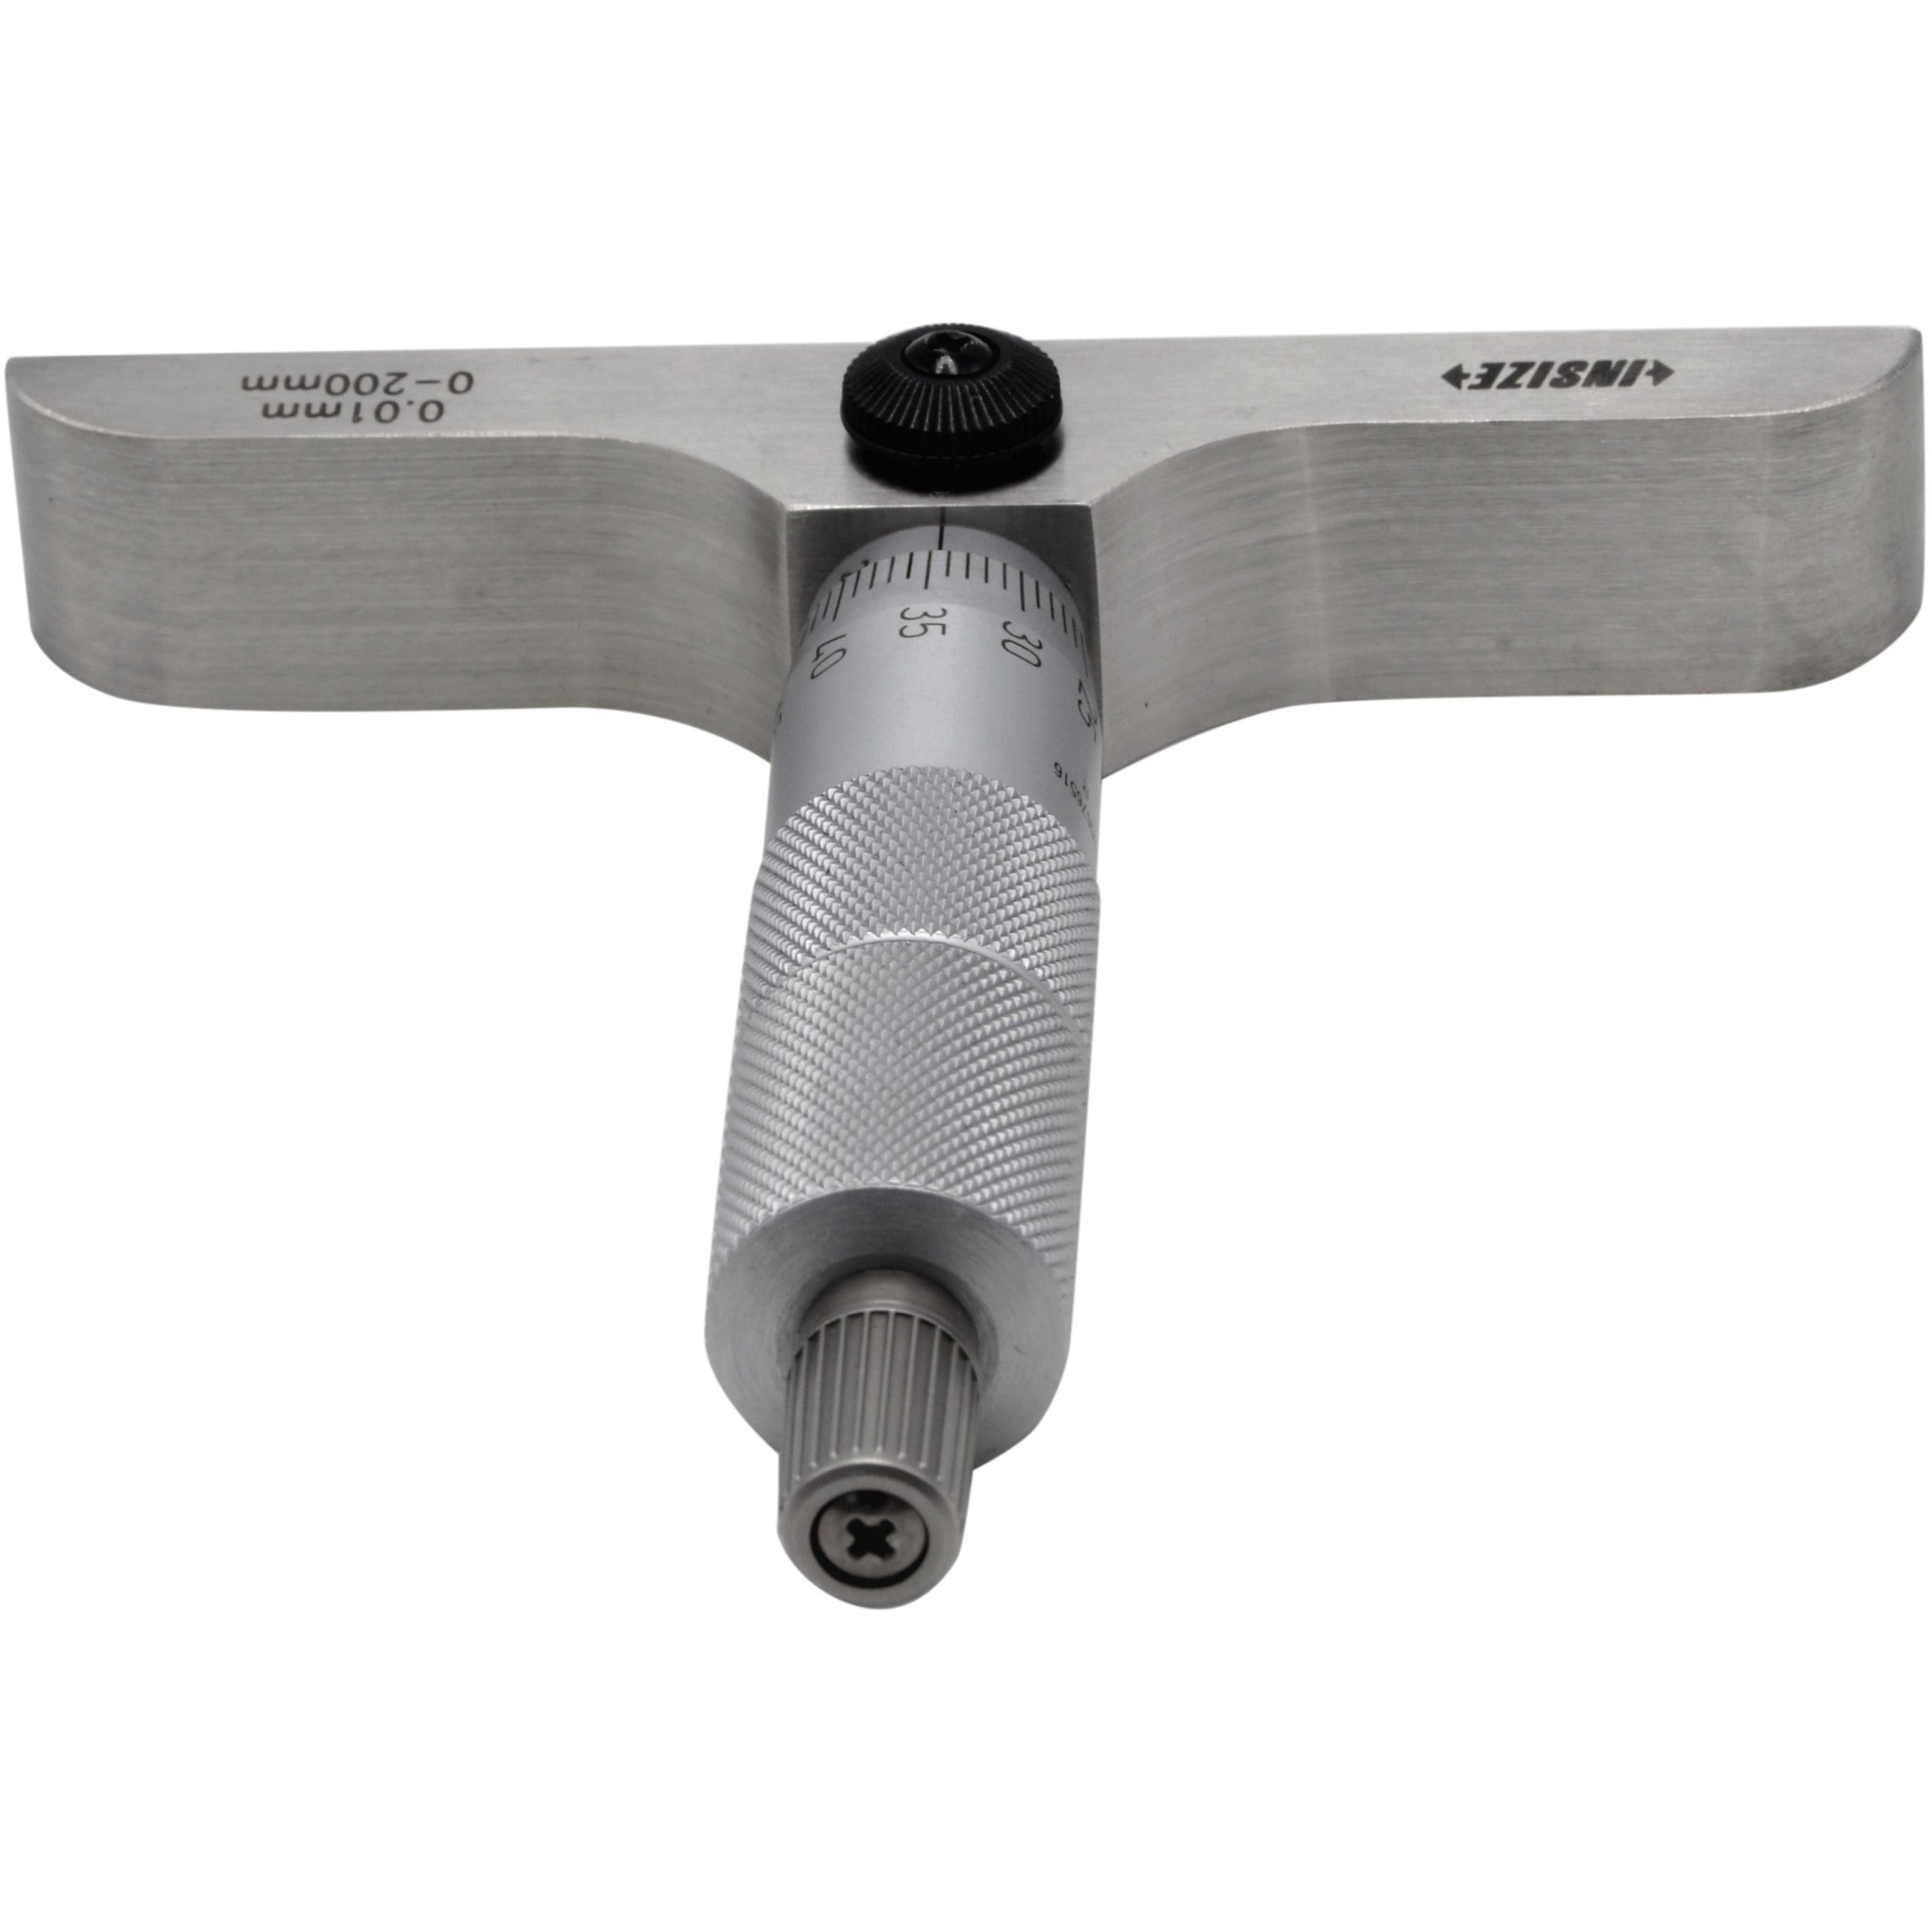 Insize Stabilized Metric Depth Micrometer 0 - 200MM Range Series 3241-200